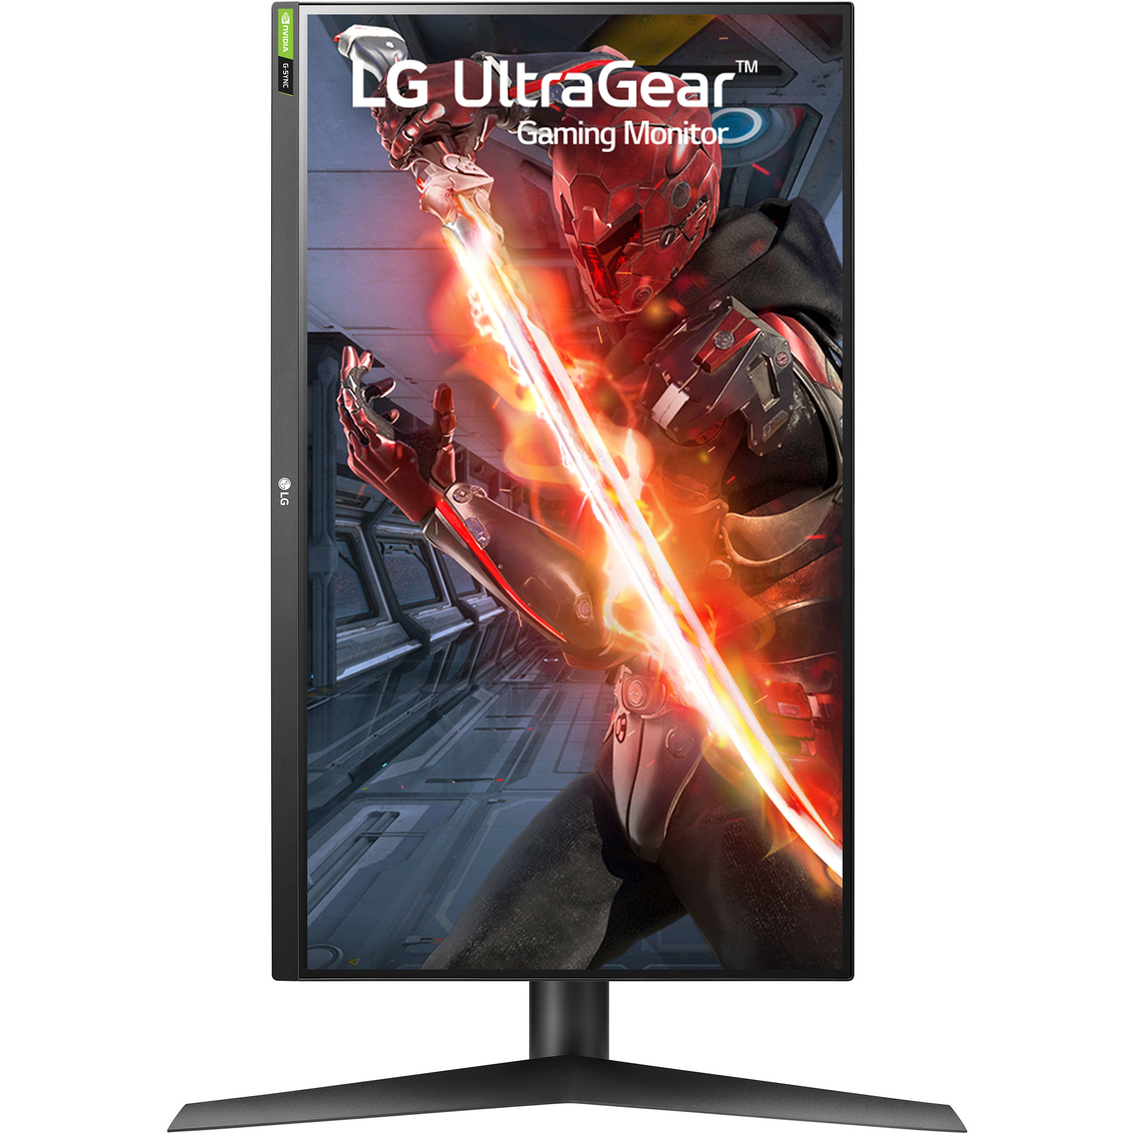 LG 27GN750-B - Monitor Gaming LG UltraGear (Panel IPS: 1920x1080p, 16:9,  400 cd/m², 1000:1, 240Hz, 1ms); DPx1, HDMIx2, USB-Ax3; G-Sync Compatible;  Regulable en altura e inclinacion y pivotable, F